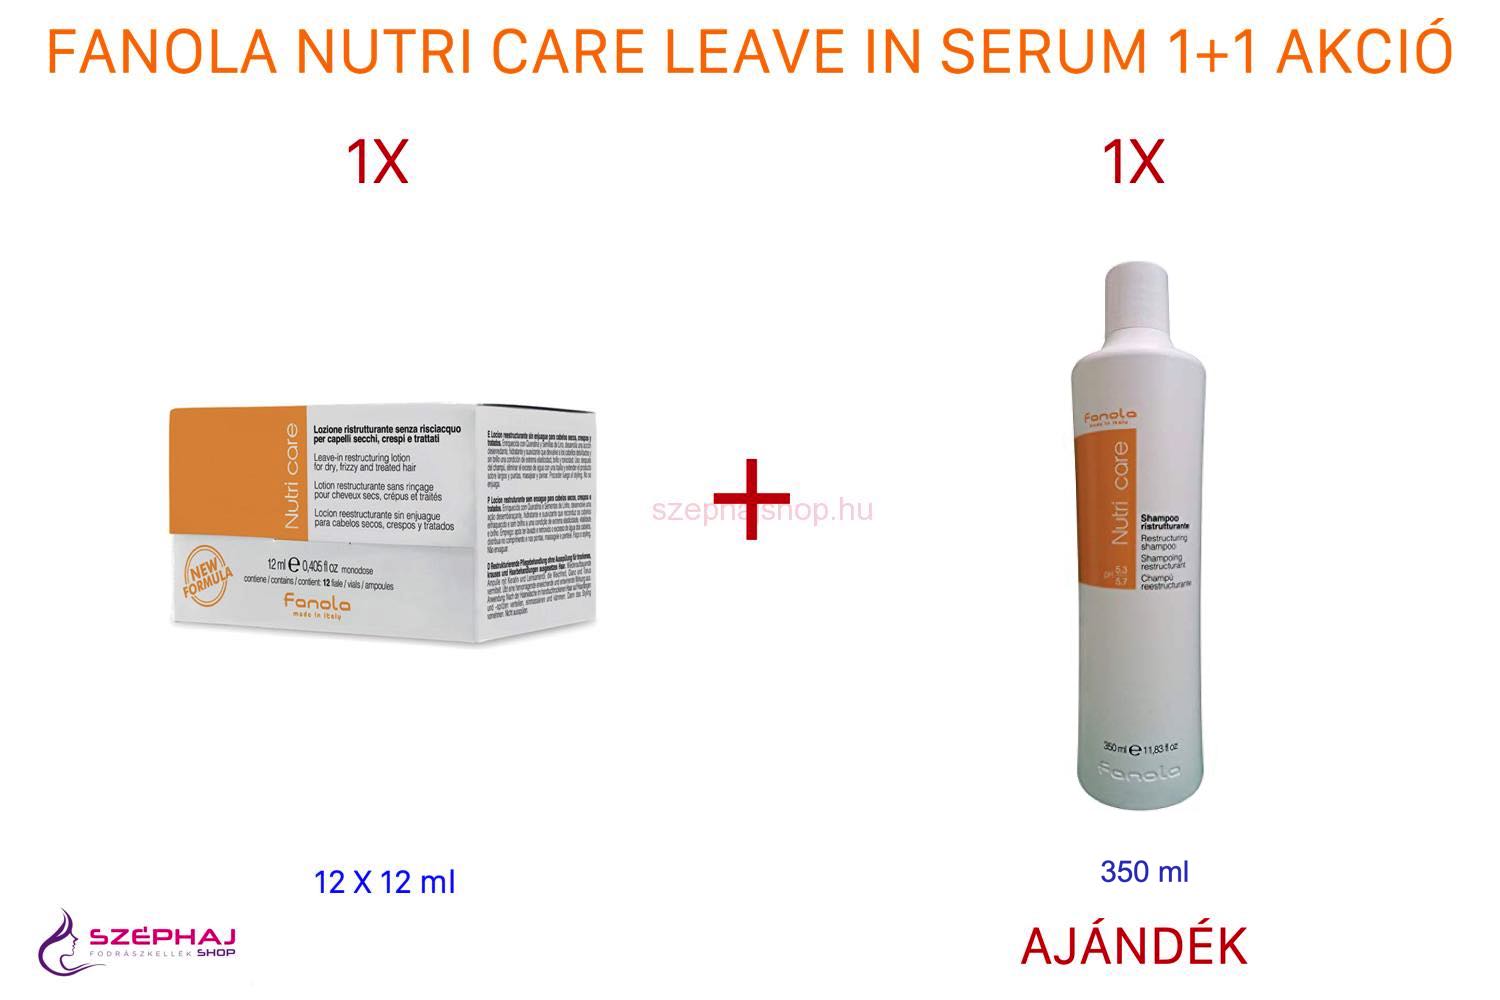 FANOLA Nutri Care Leave-In Restructuring Serum 12 x 12 ml 1+1 AKCIÓ